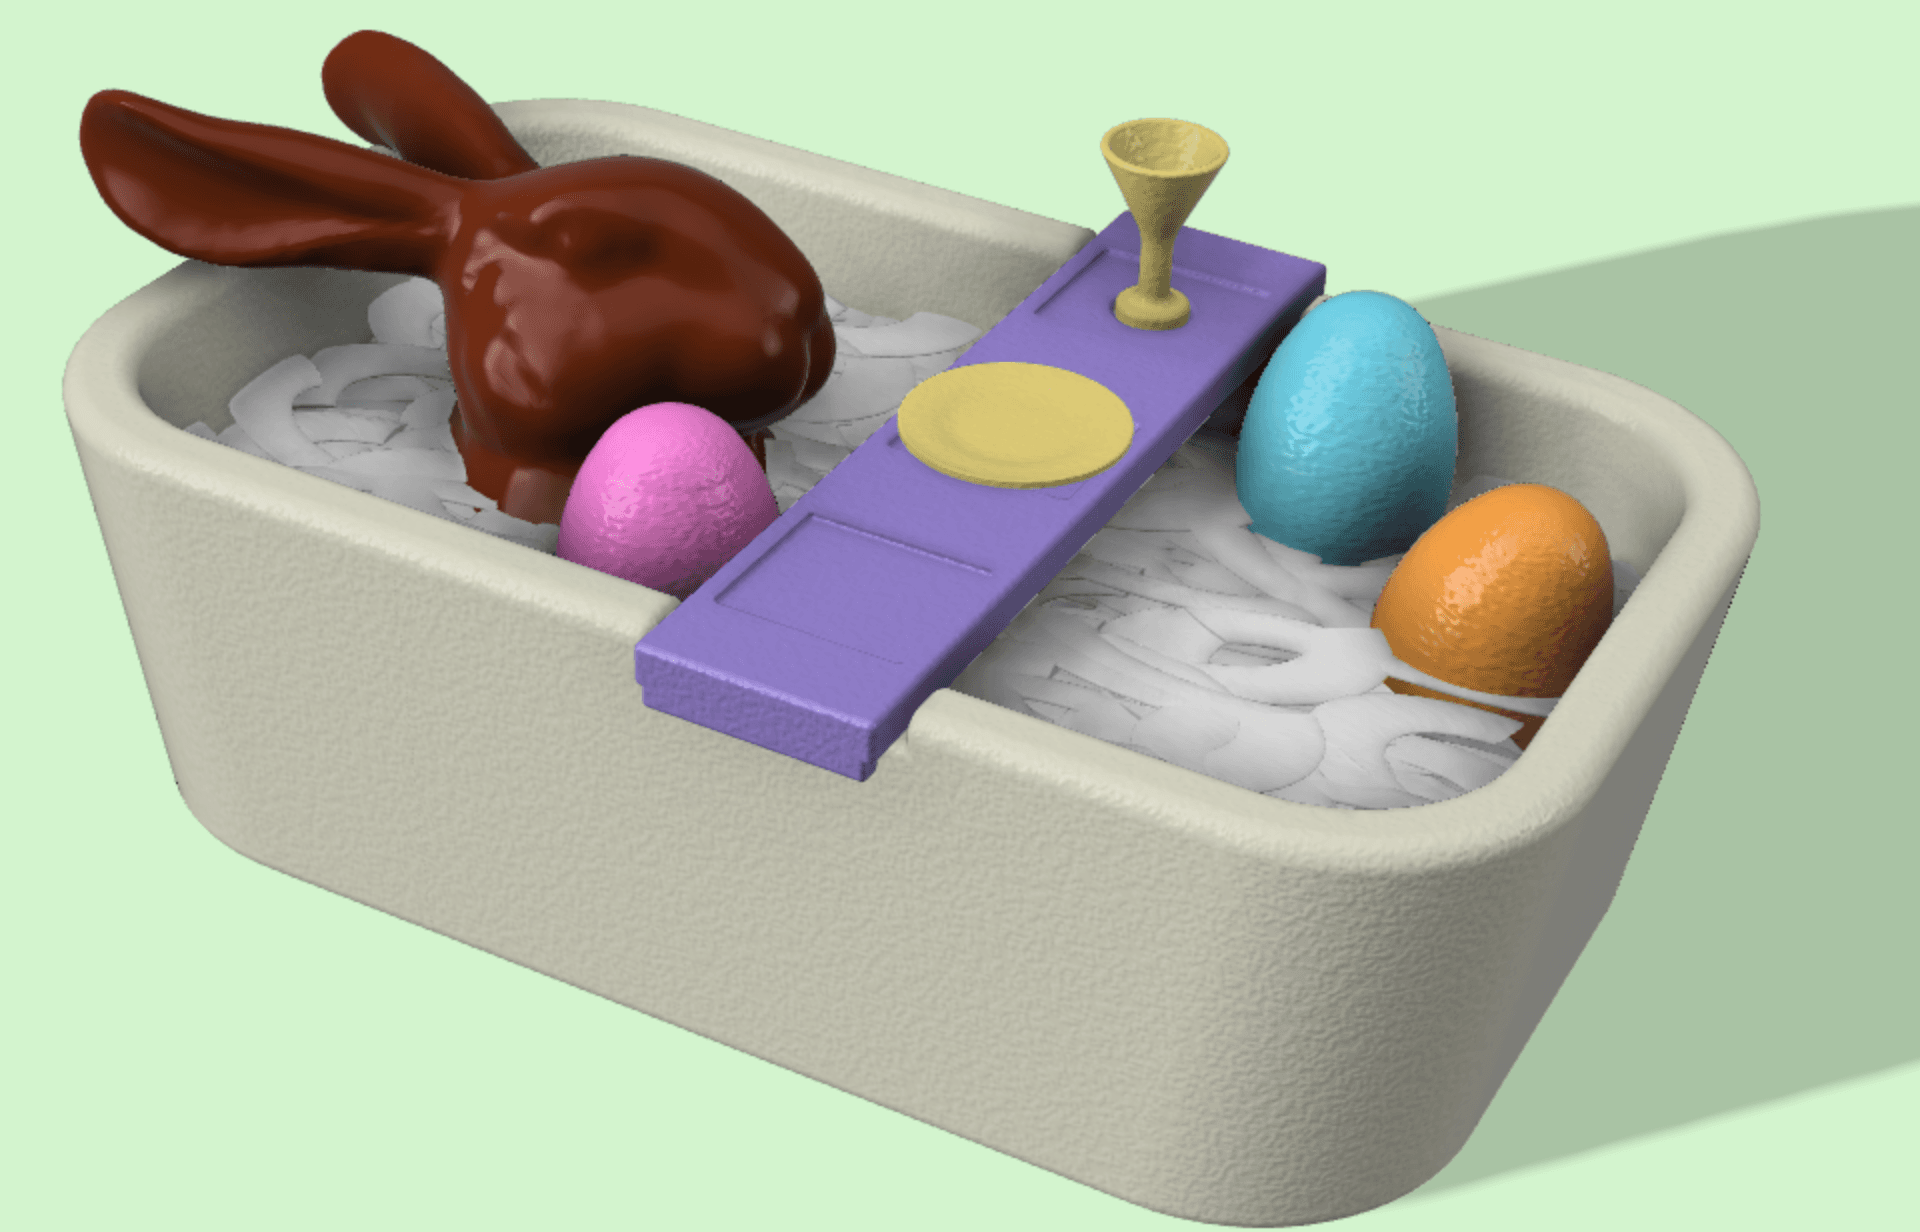 Easter Bunny Bathtub 3d model